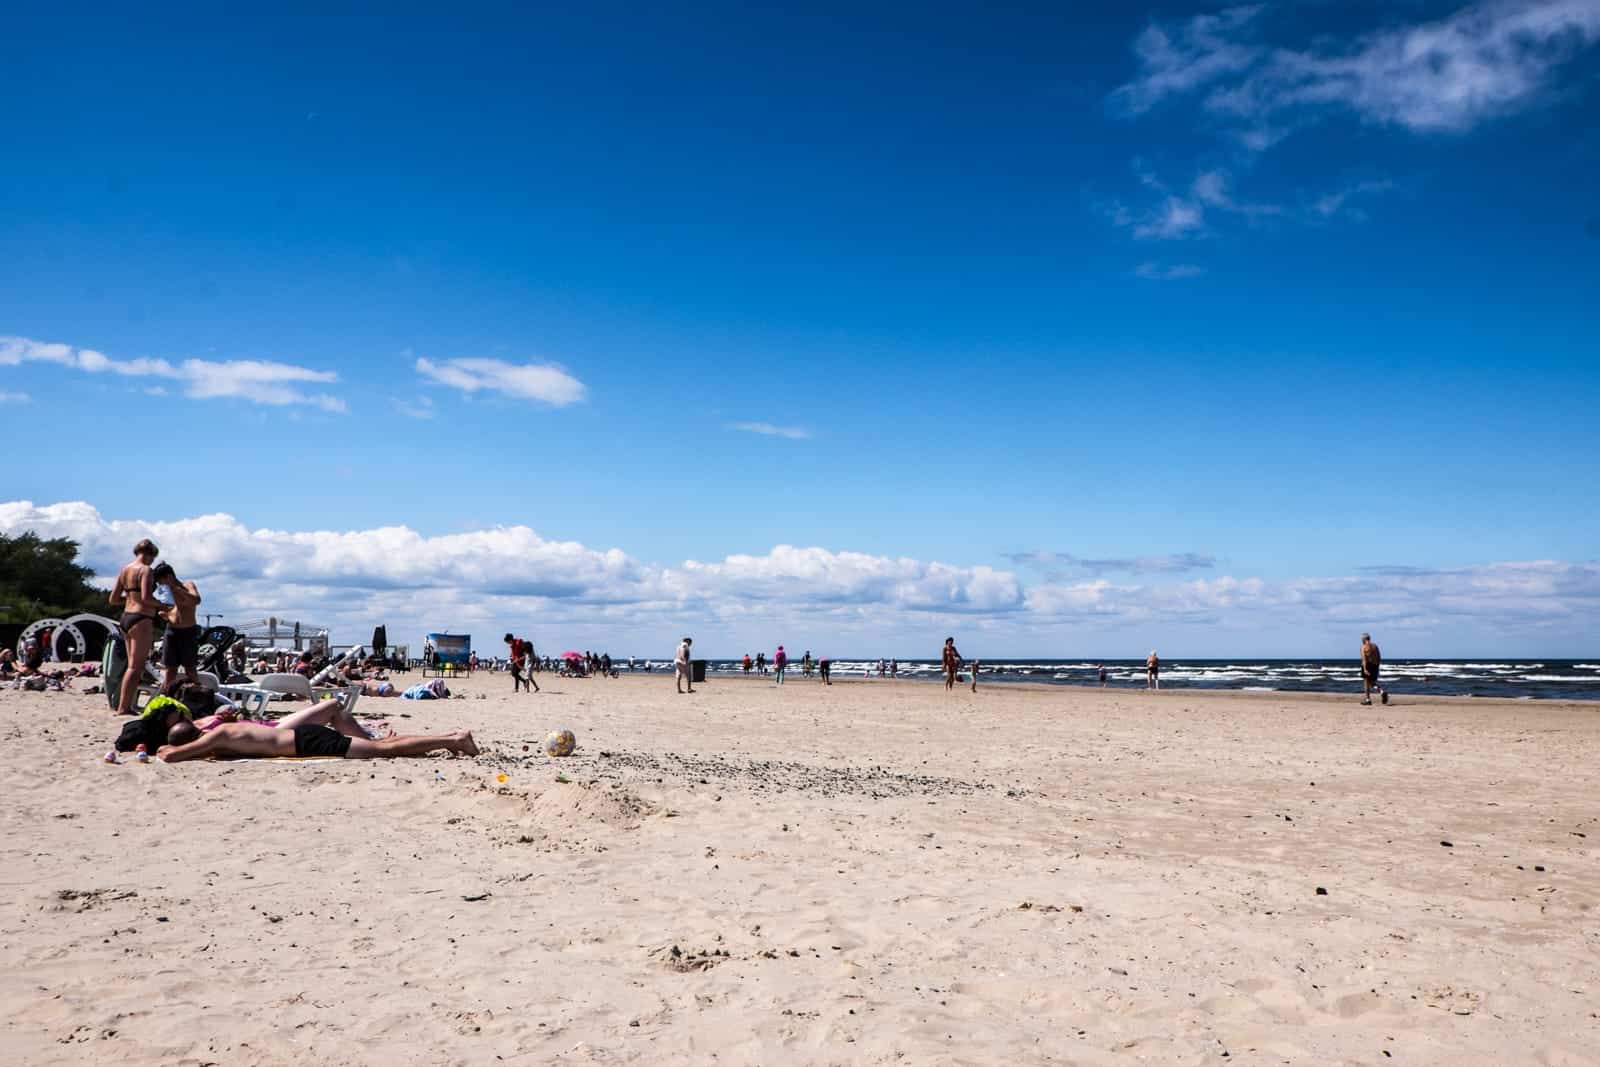 White sand beaches of Jumala called Riga Beach in Latvia